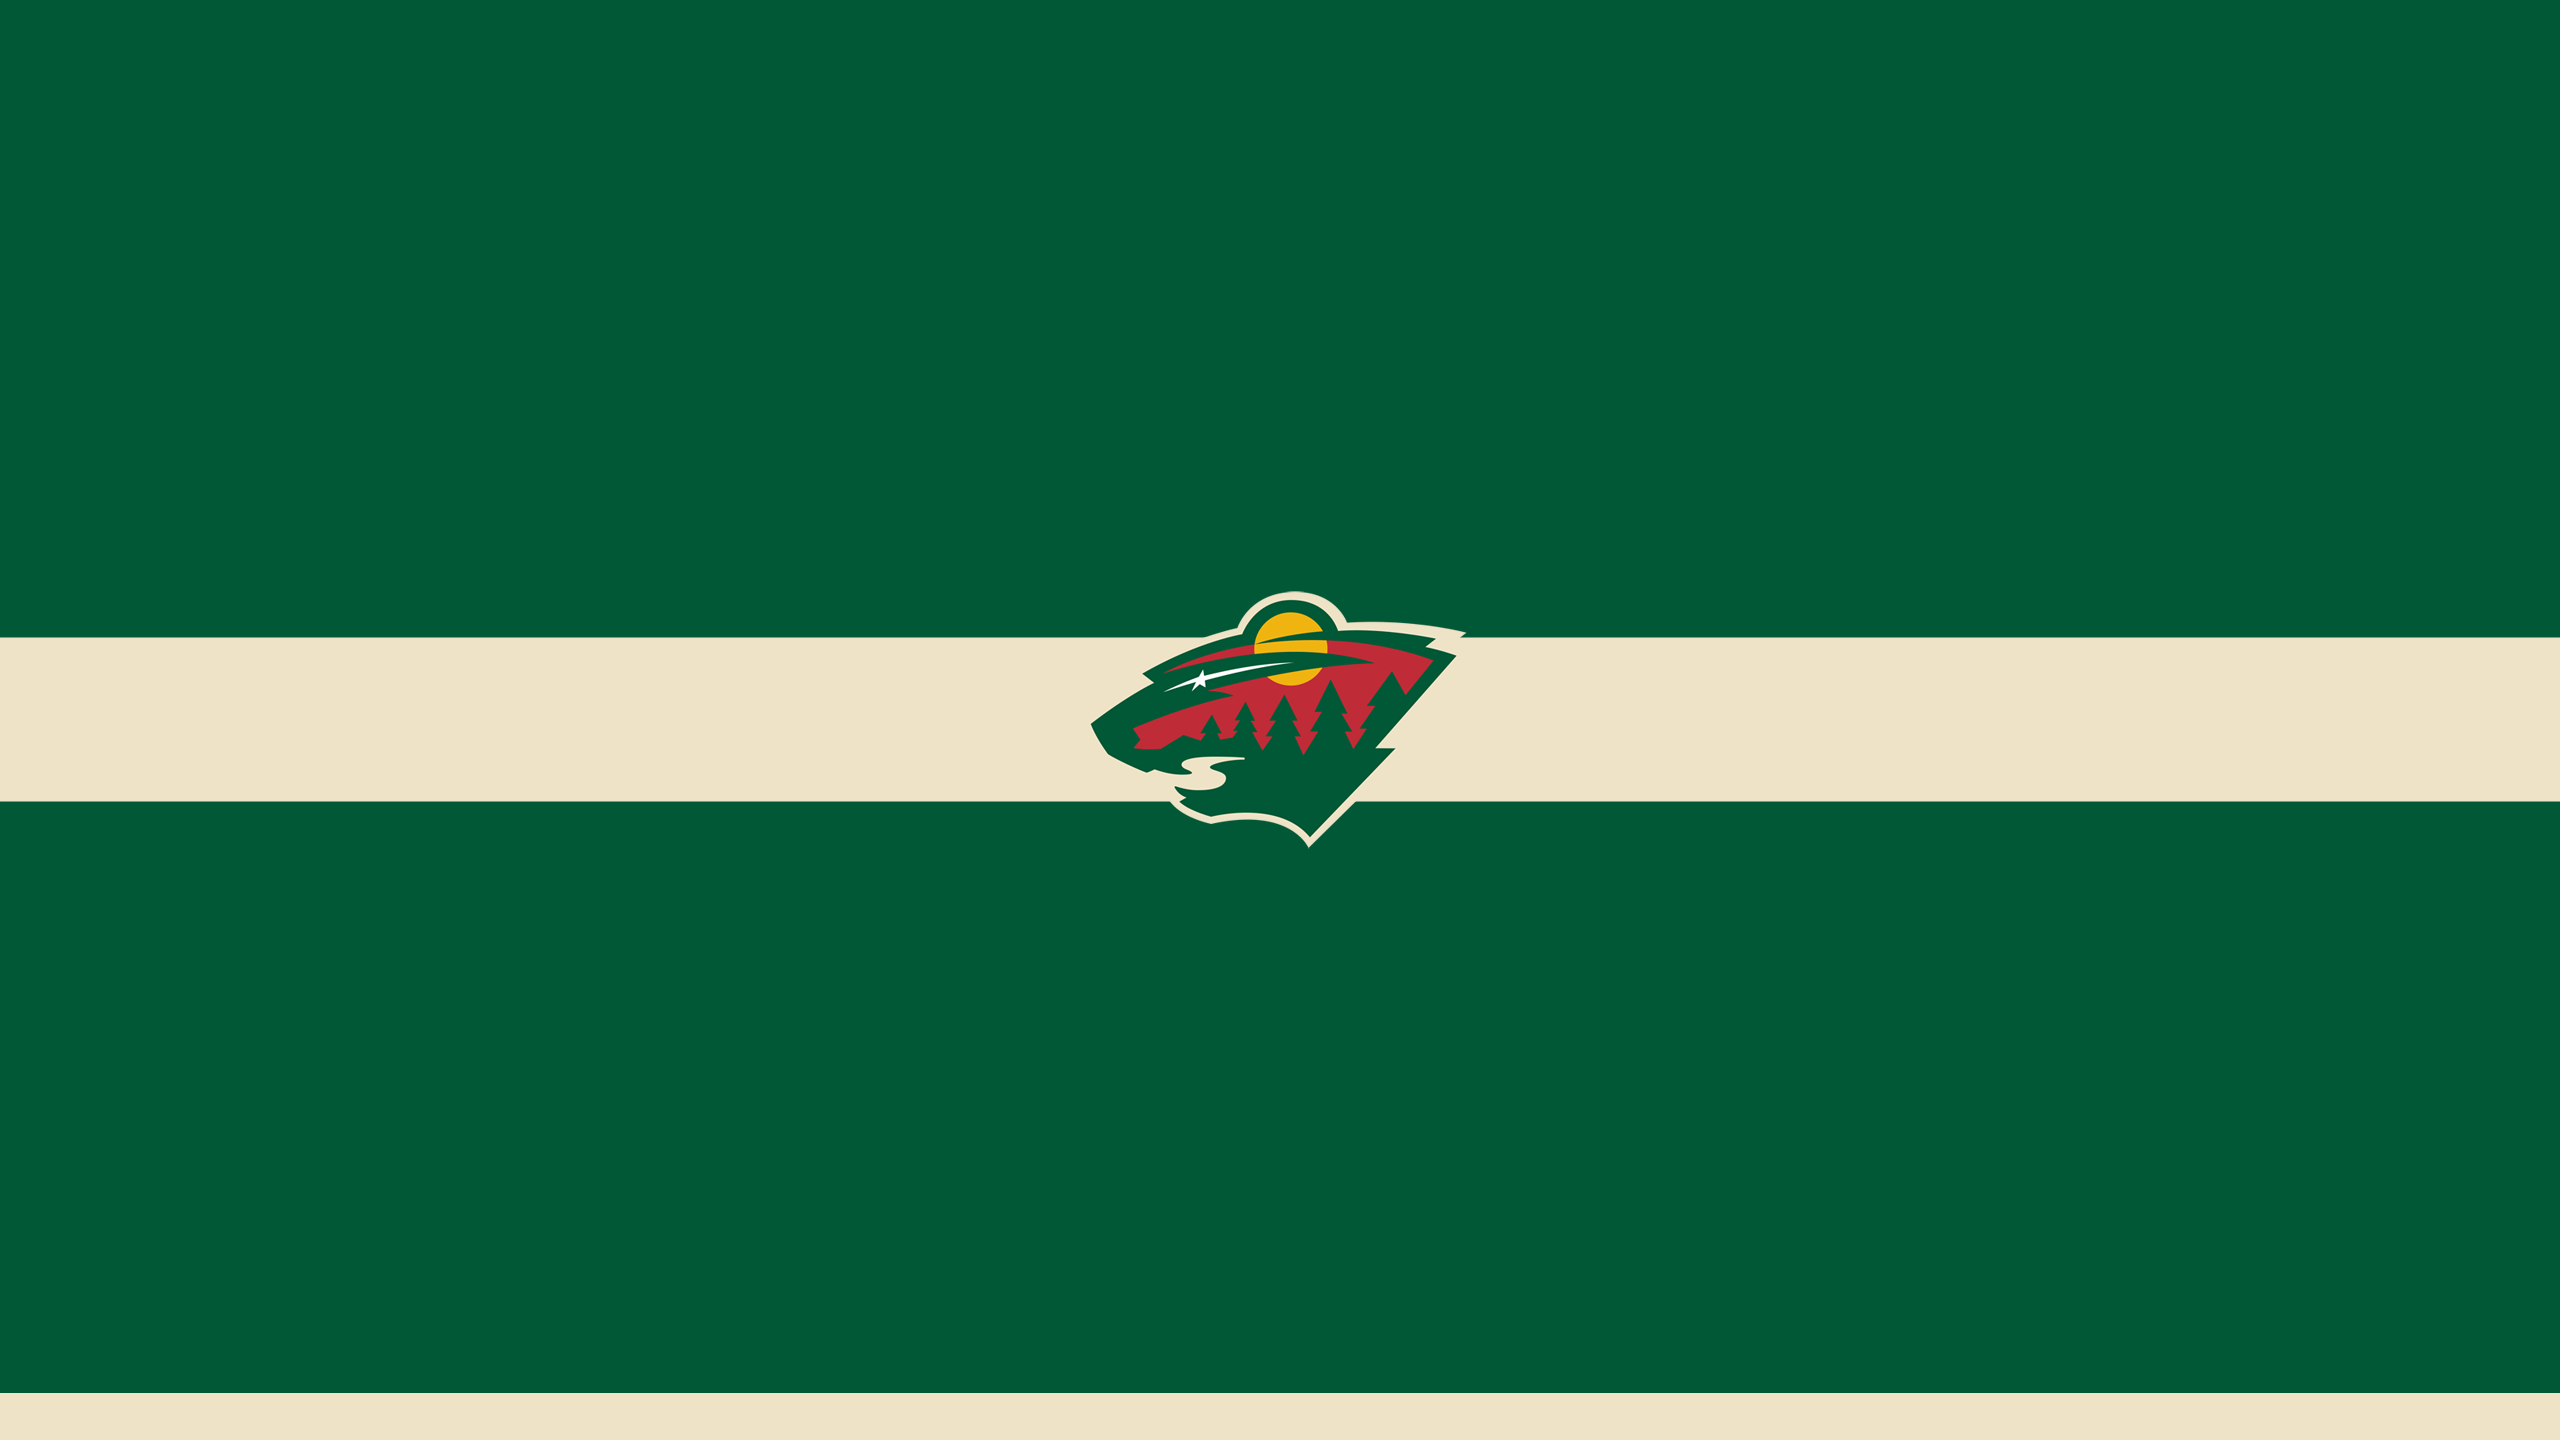 Minnesota Wild - NHL - Square Bettor